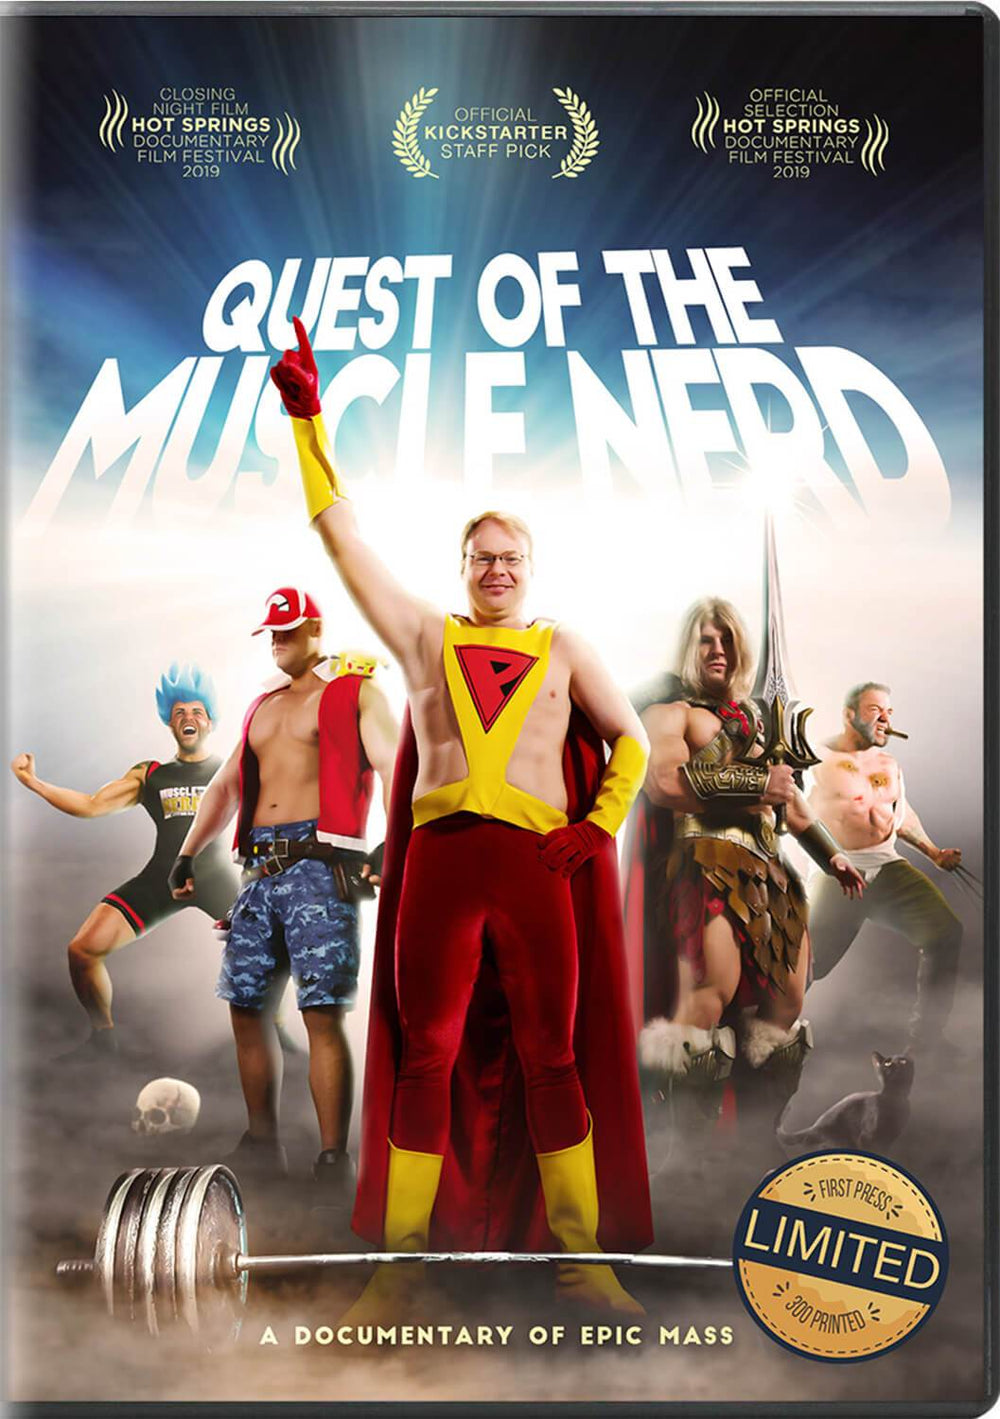 Quest of the Muscle Nerd DVD DVD by Muscle Nerd - Pixel Empire